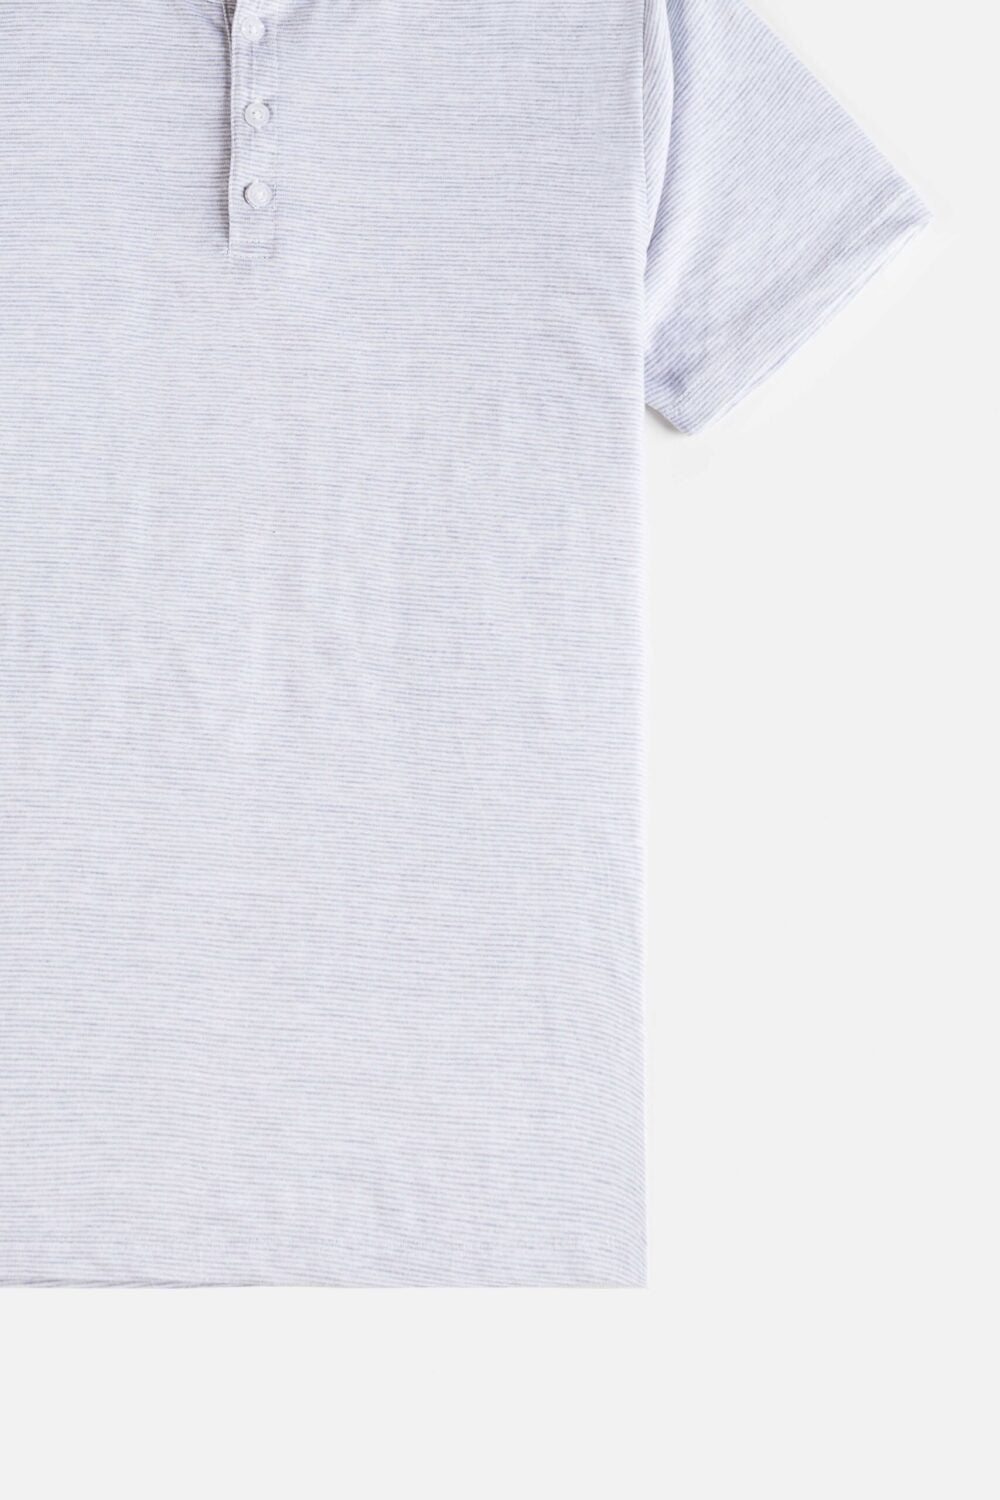 ZR Henley Cotton T Shirt – Fog White